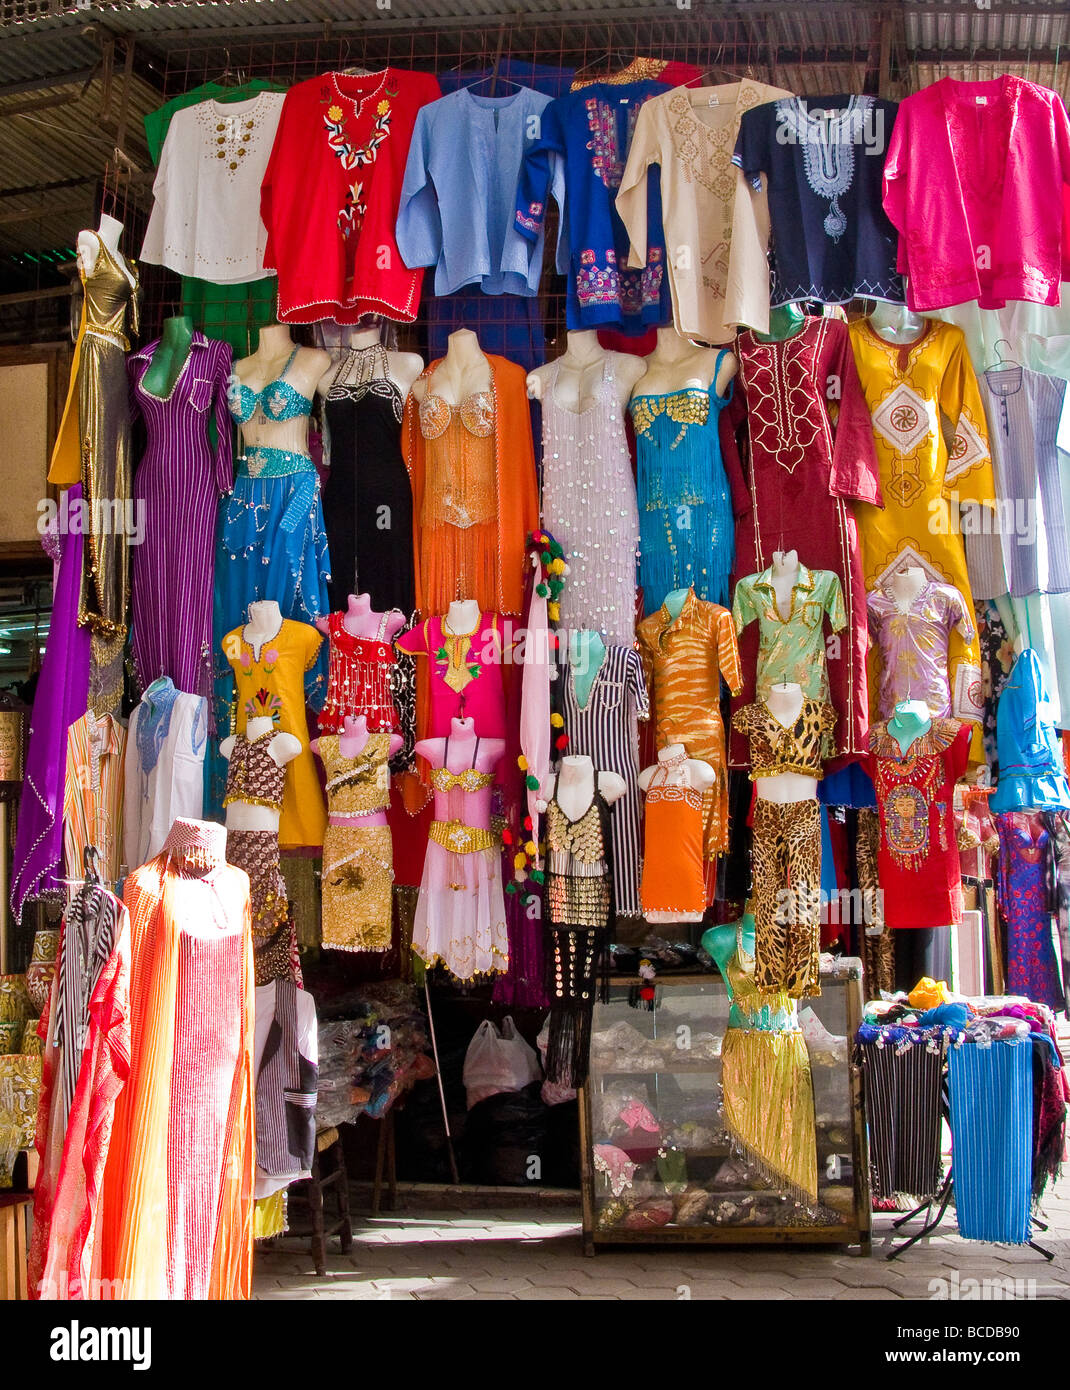 The Dress Shop In Khan El Khalili Bazaar In Old Cairo Stock Photo